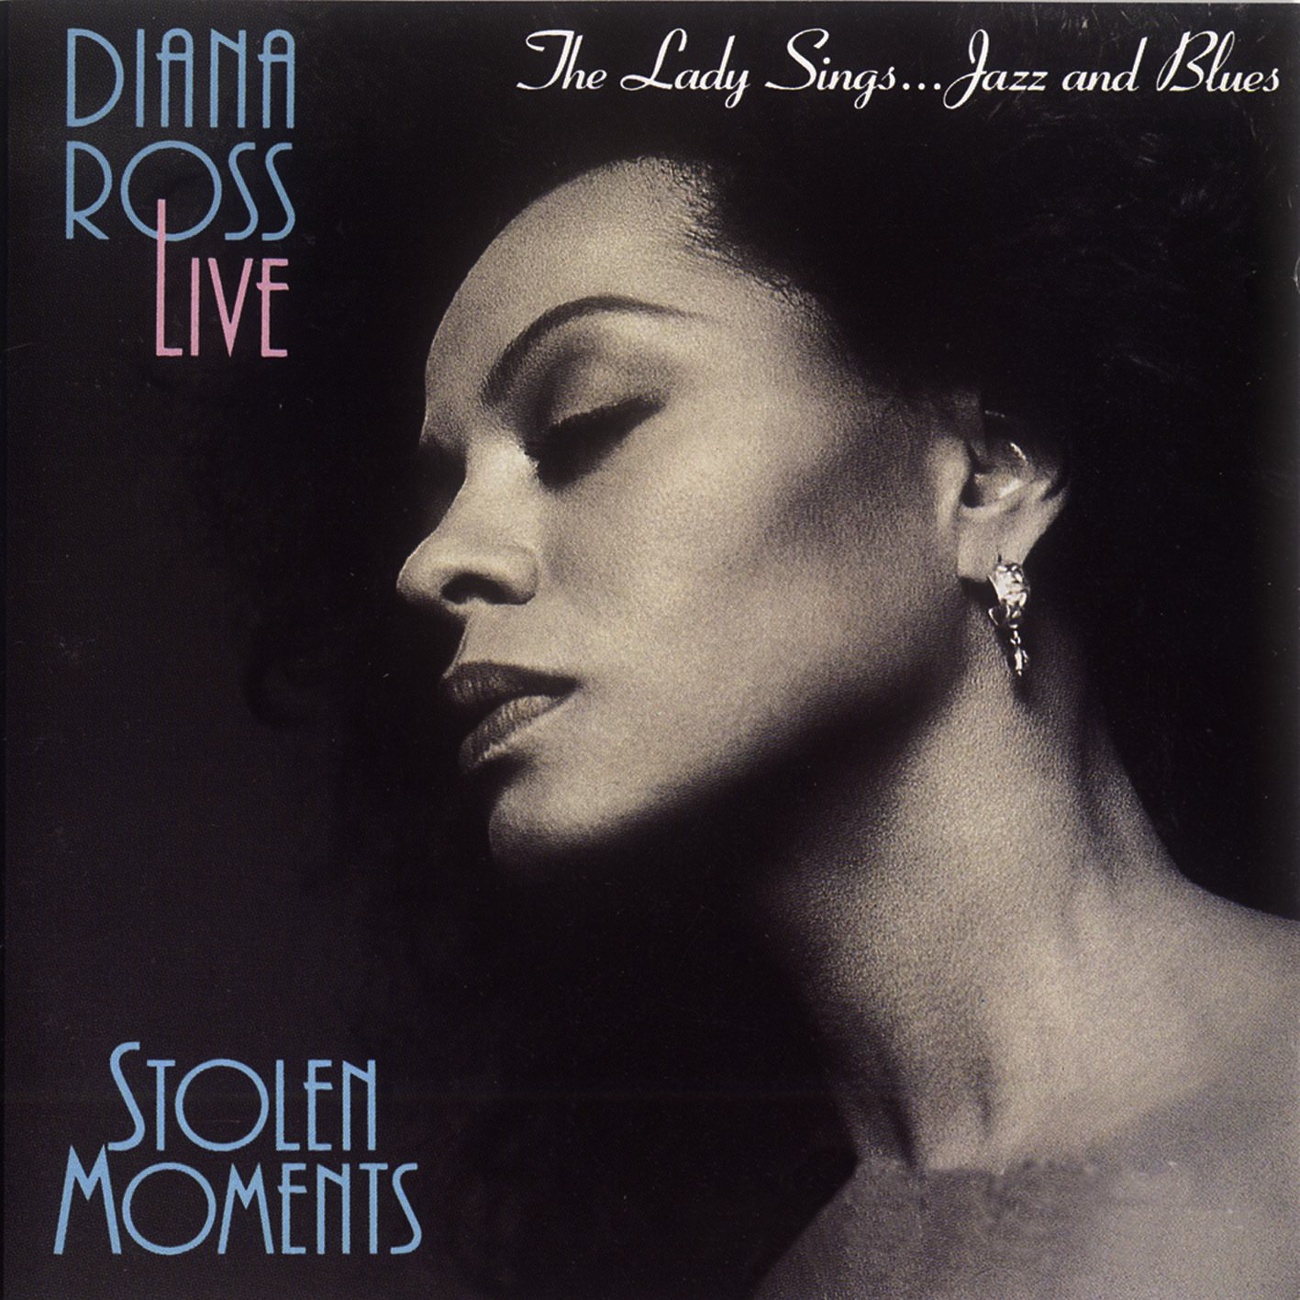 Diana Ross Live: Stolen Moments